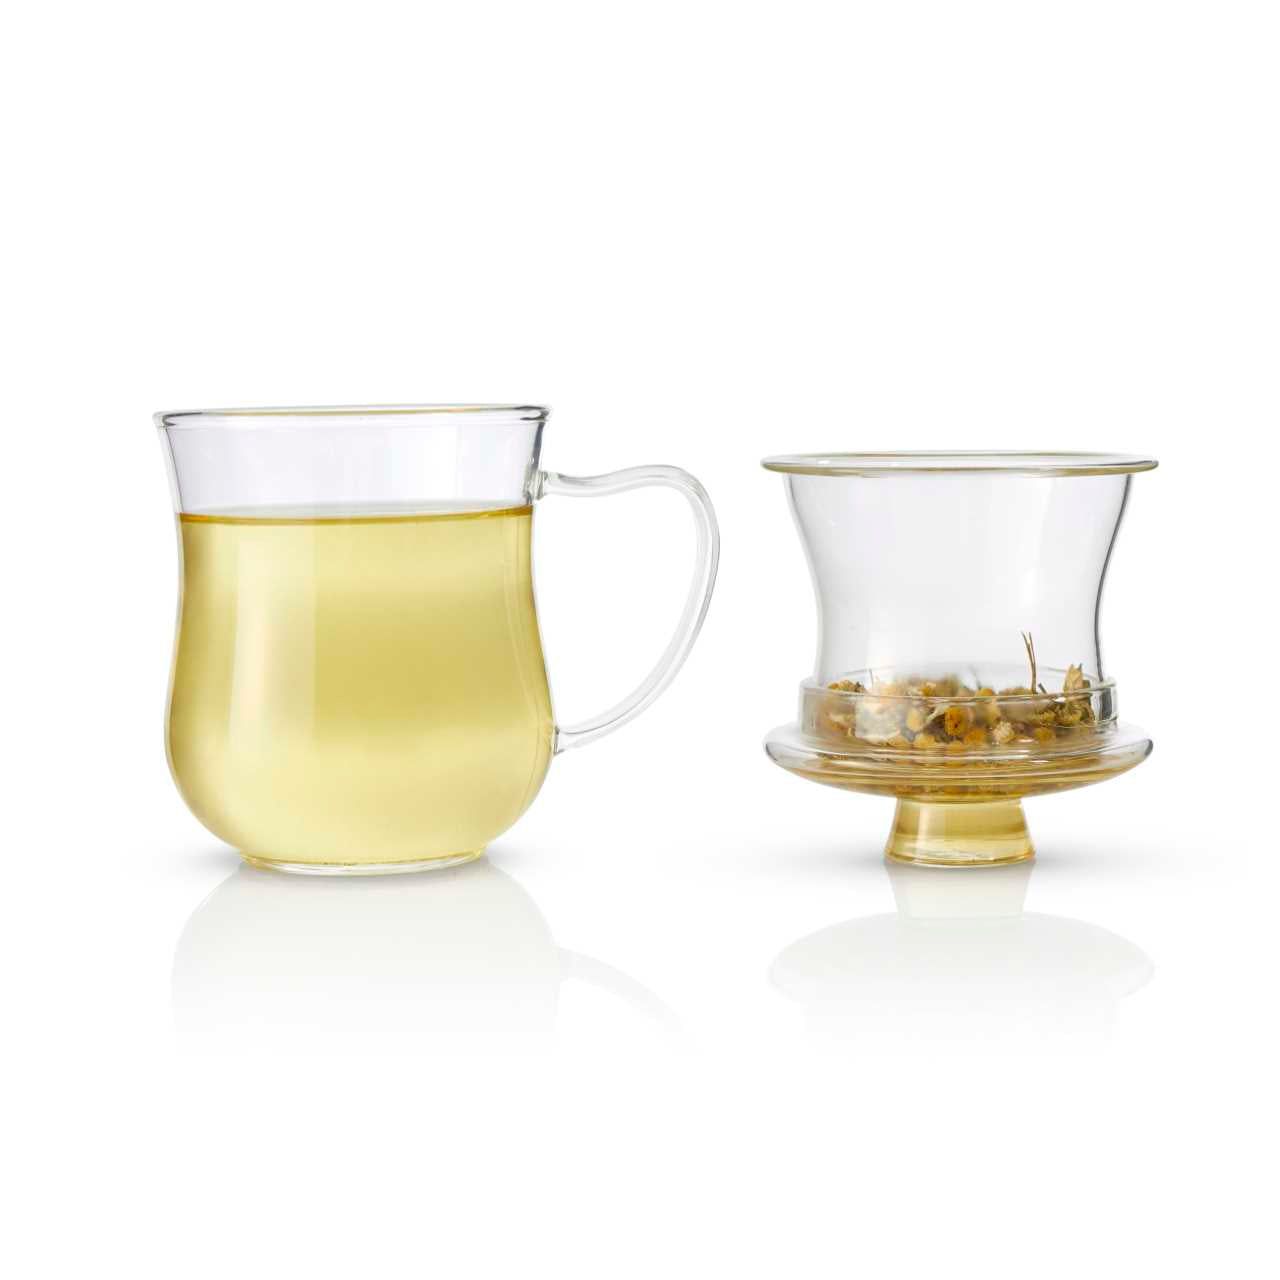 Glass Infuser Mug For Loose Leaf Tea 300ml